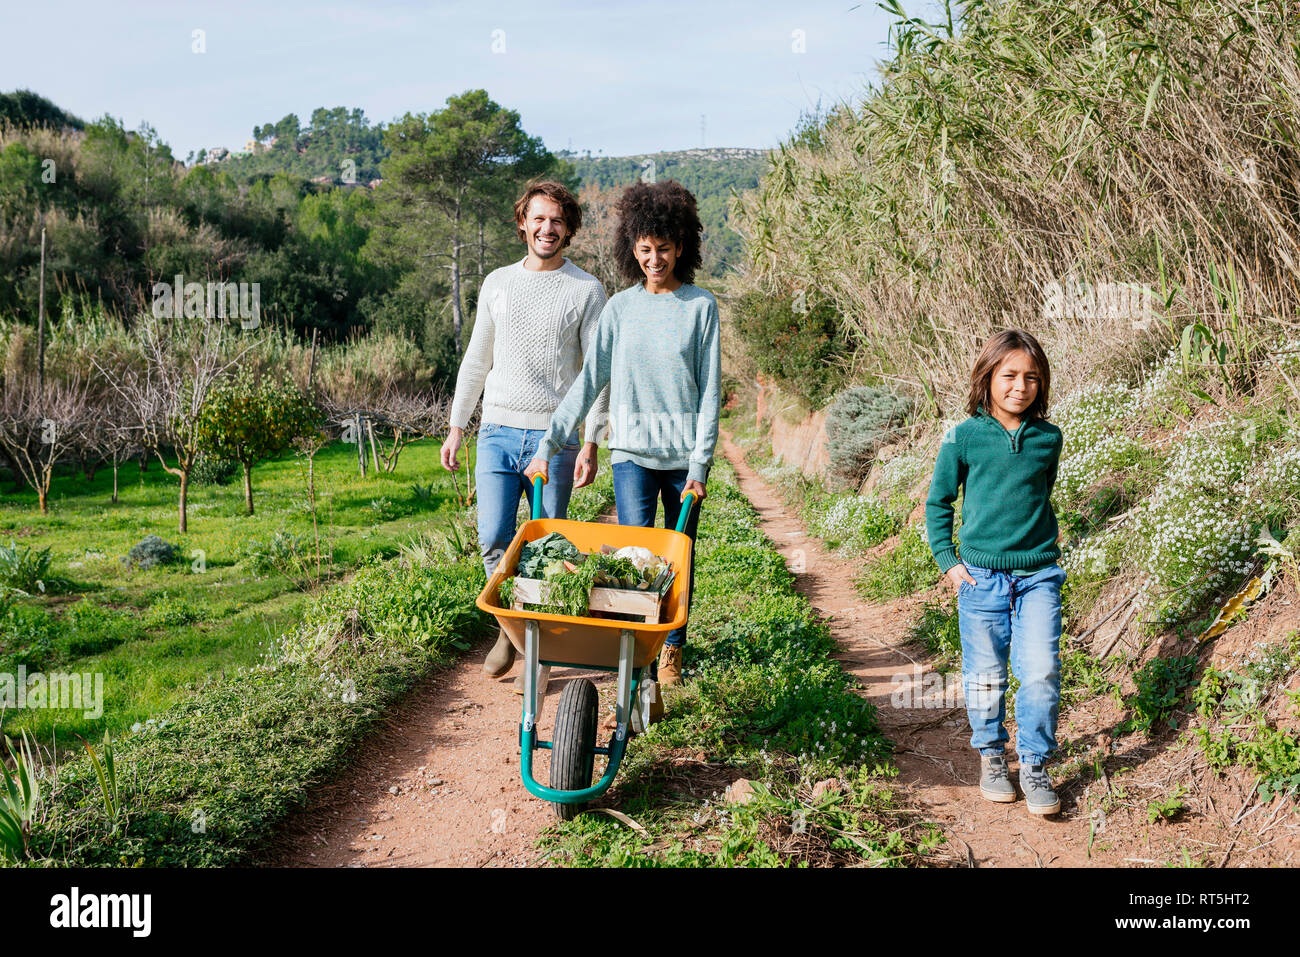 Family walking on a dirt track, pushing wheelbarrow, full of fresh vegetables Stock Photo